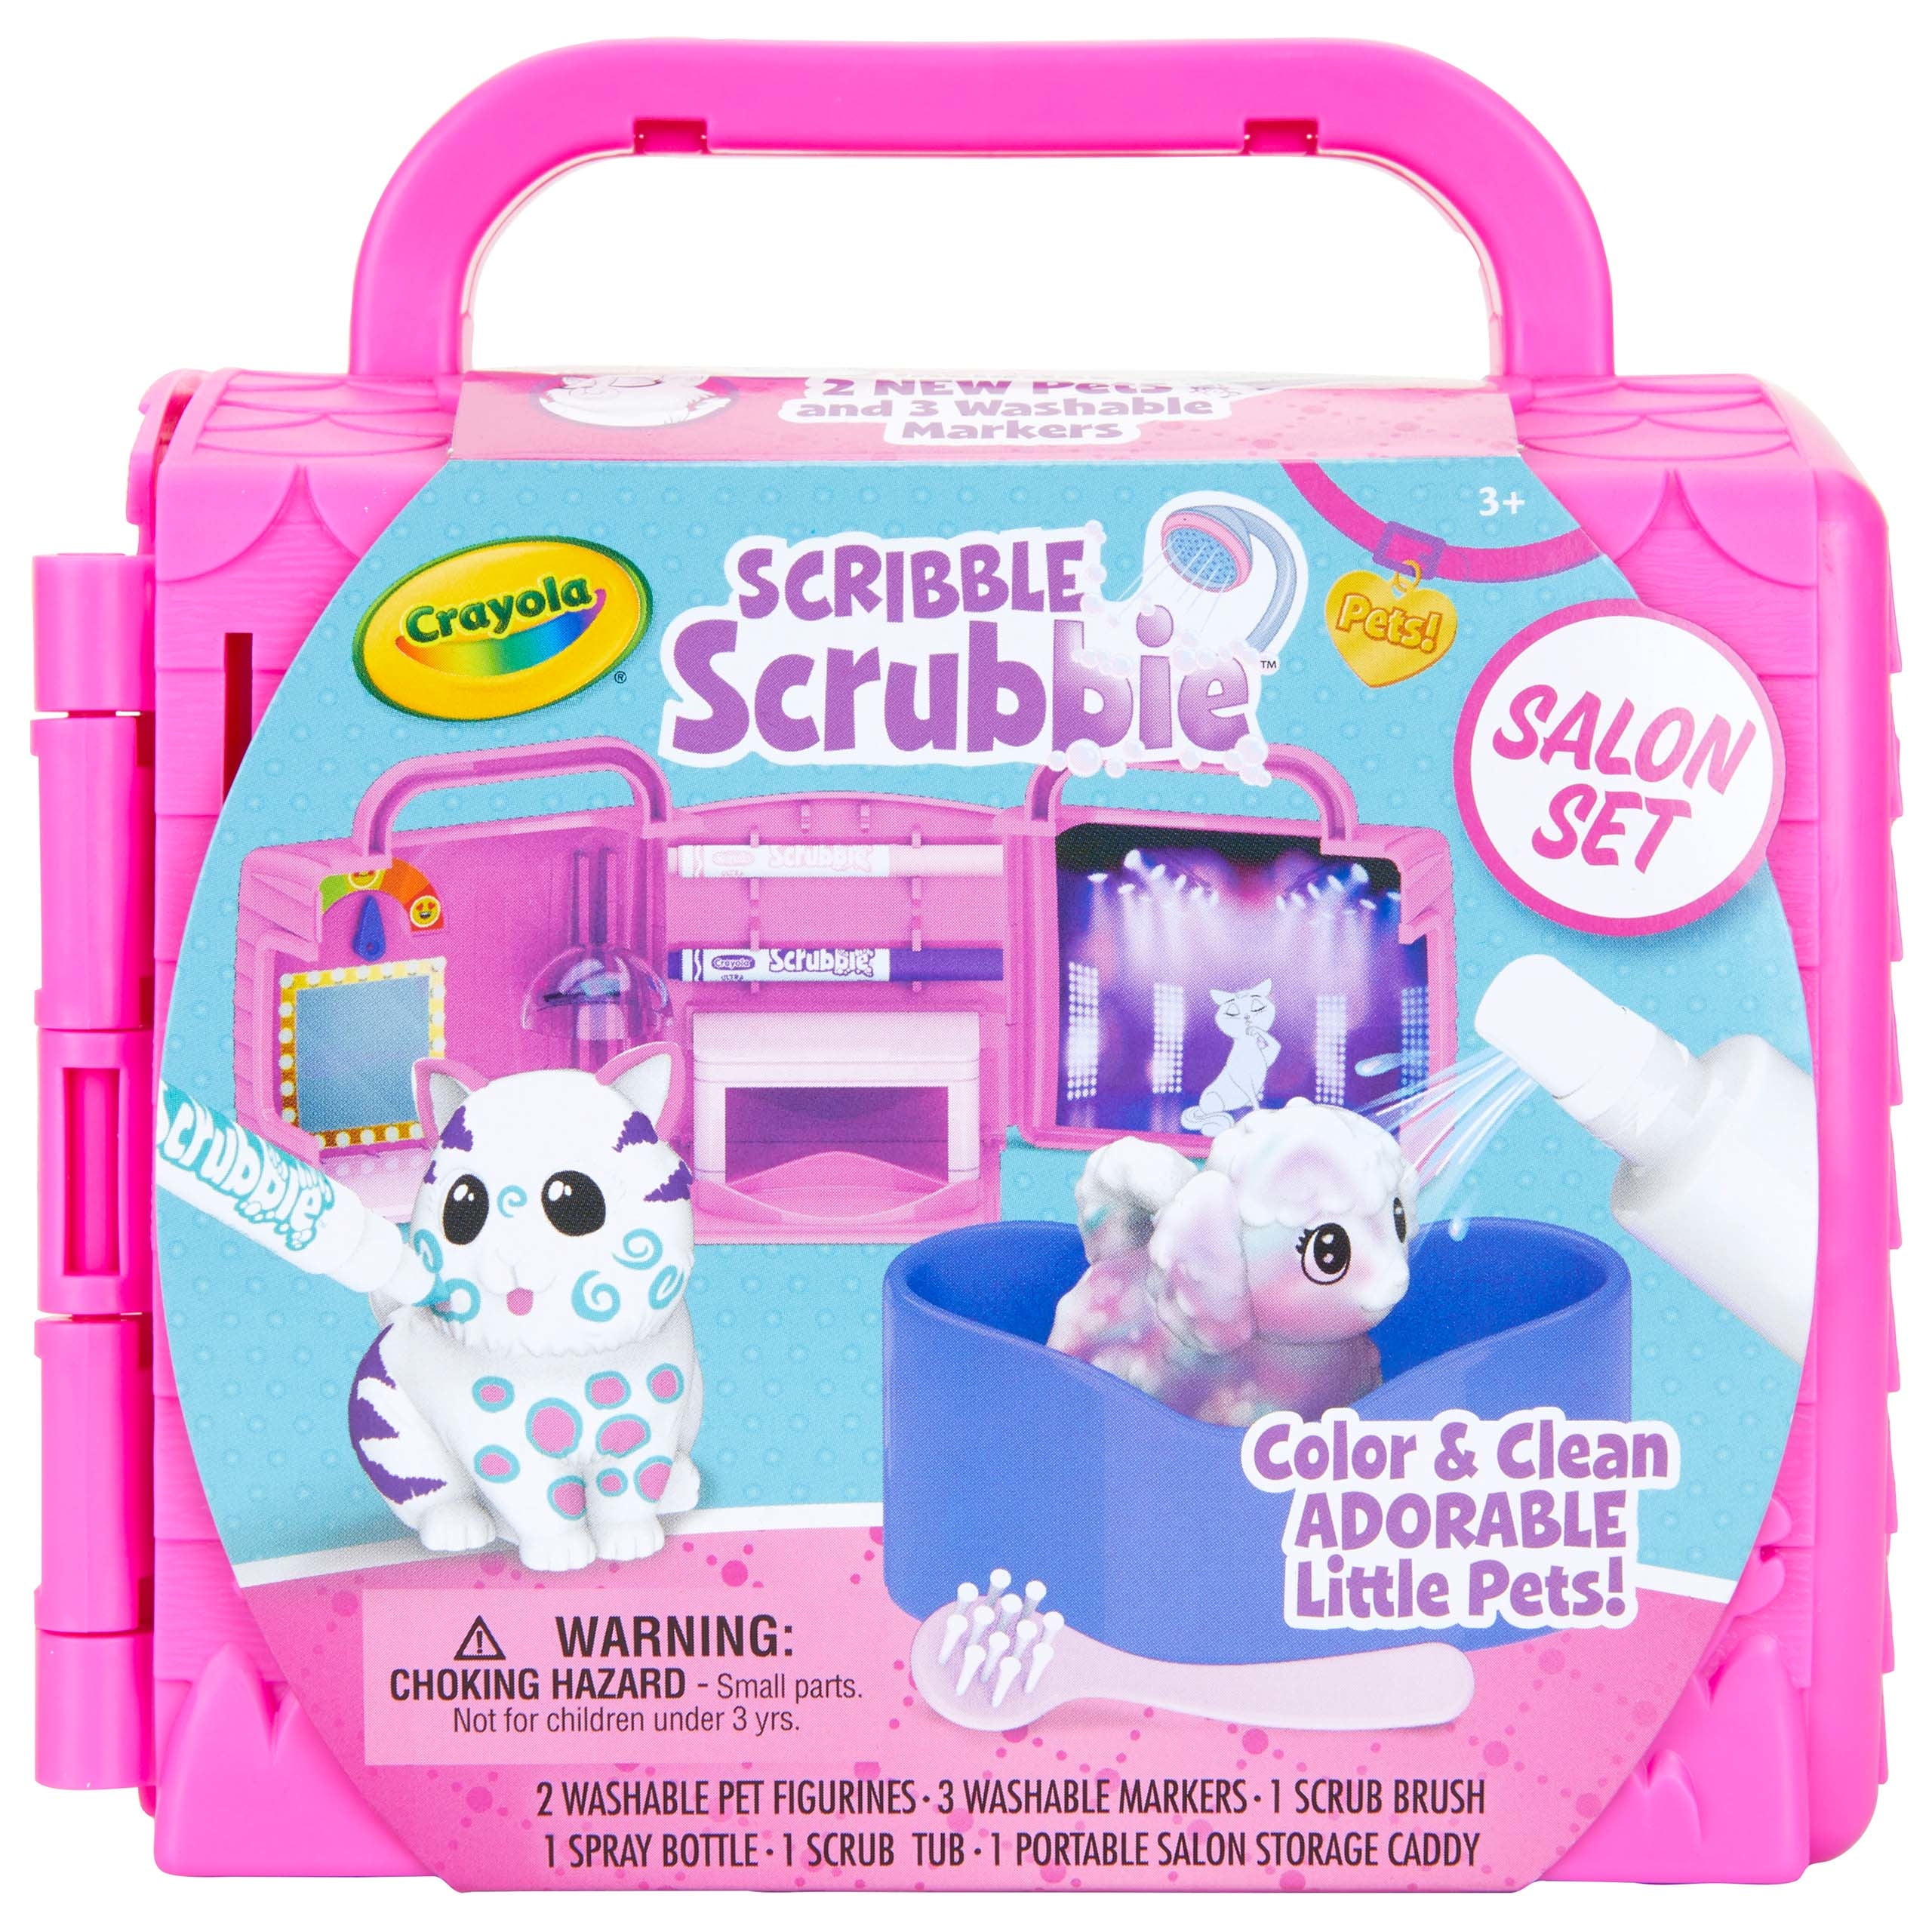 Real 2x LOL Surprise Doll Series 2 Curious QT & Cottontail QT Pet Toy Gift 